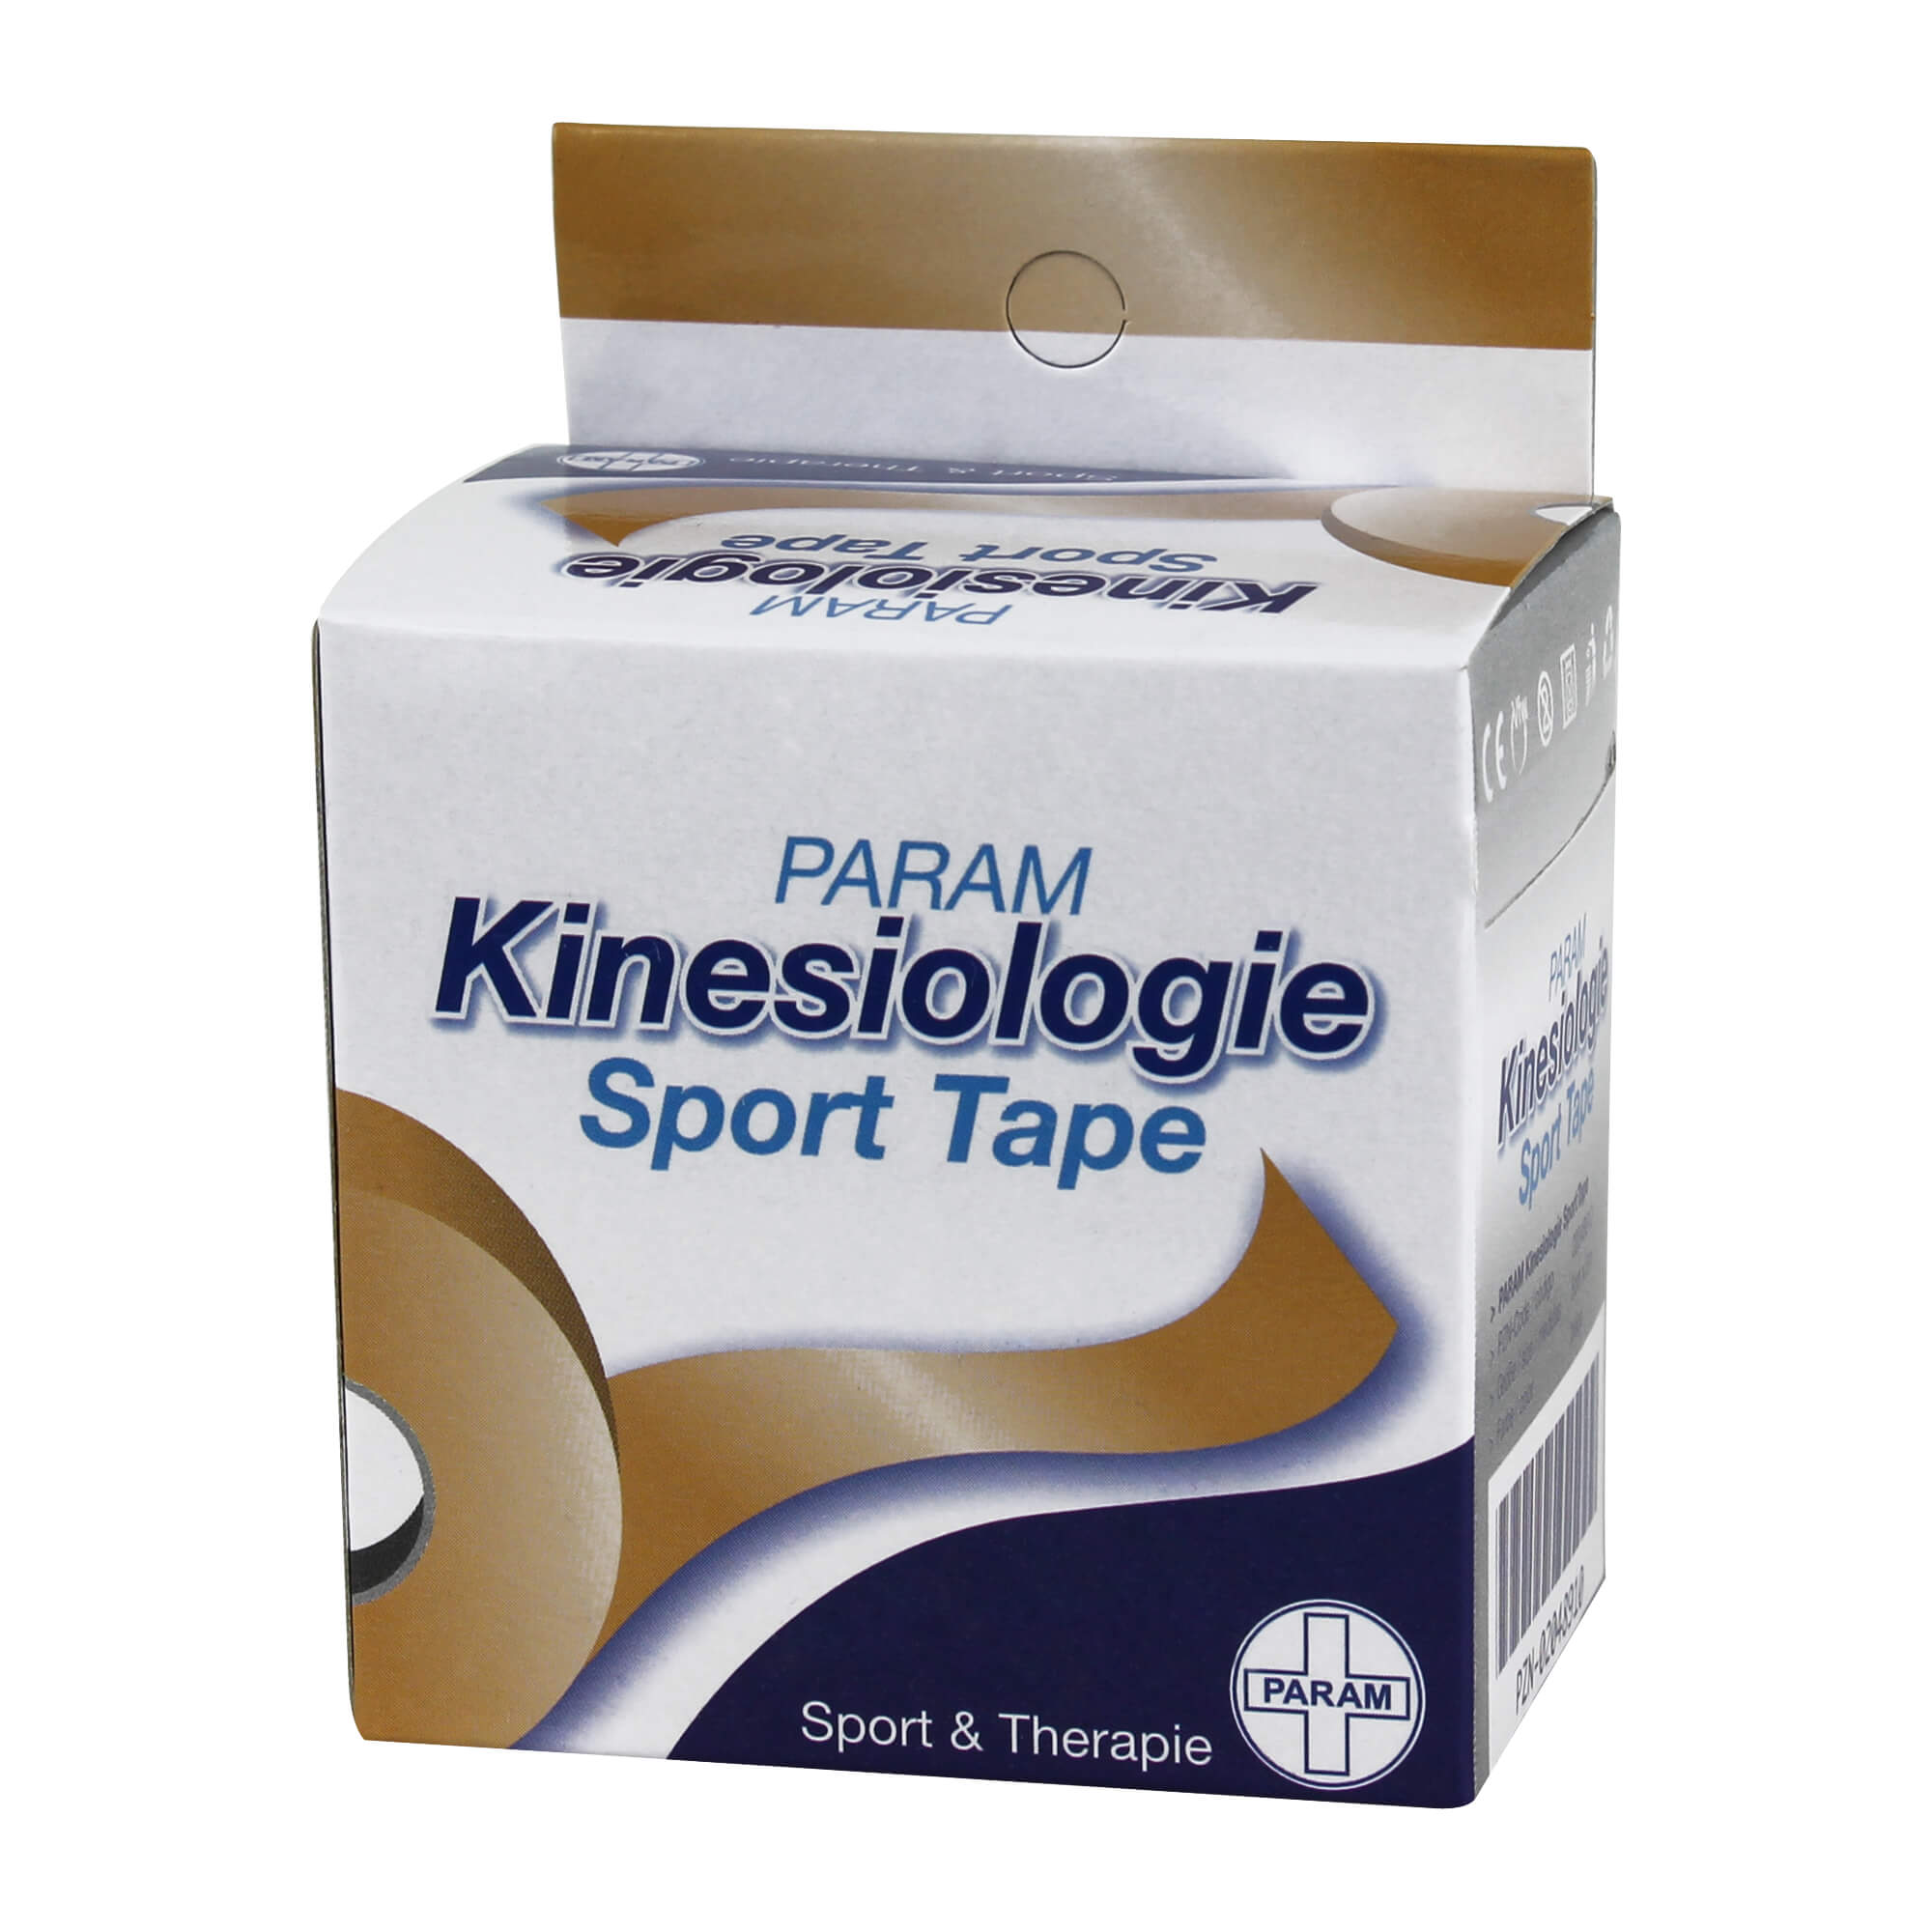 Kinesiologie Sport Tape.